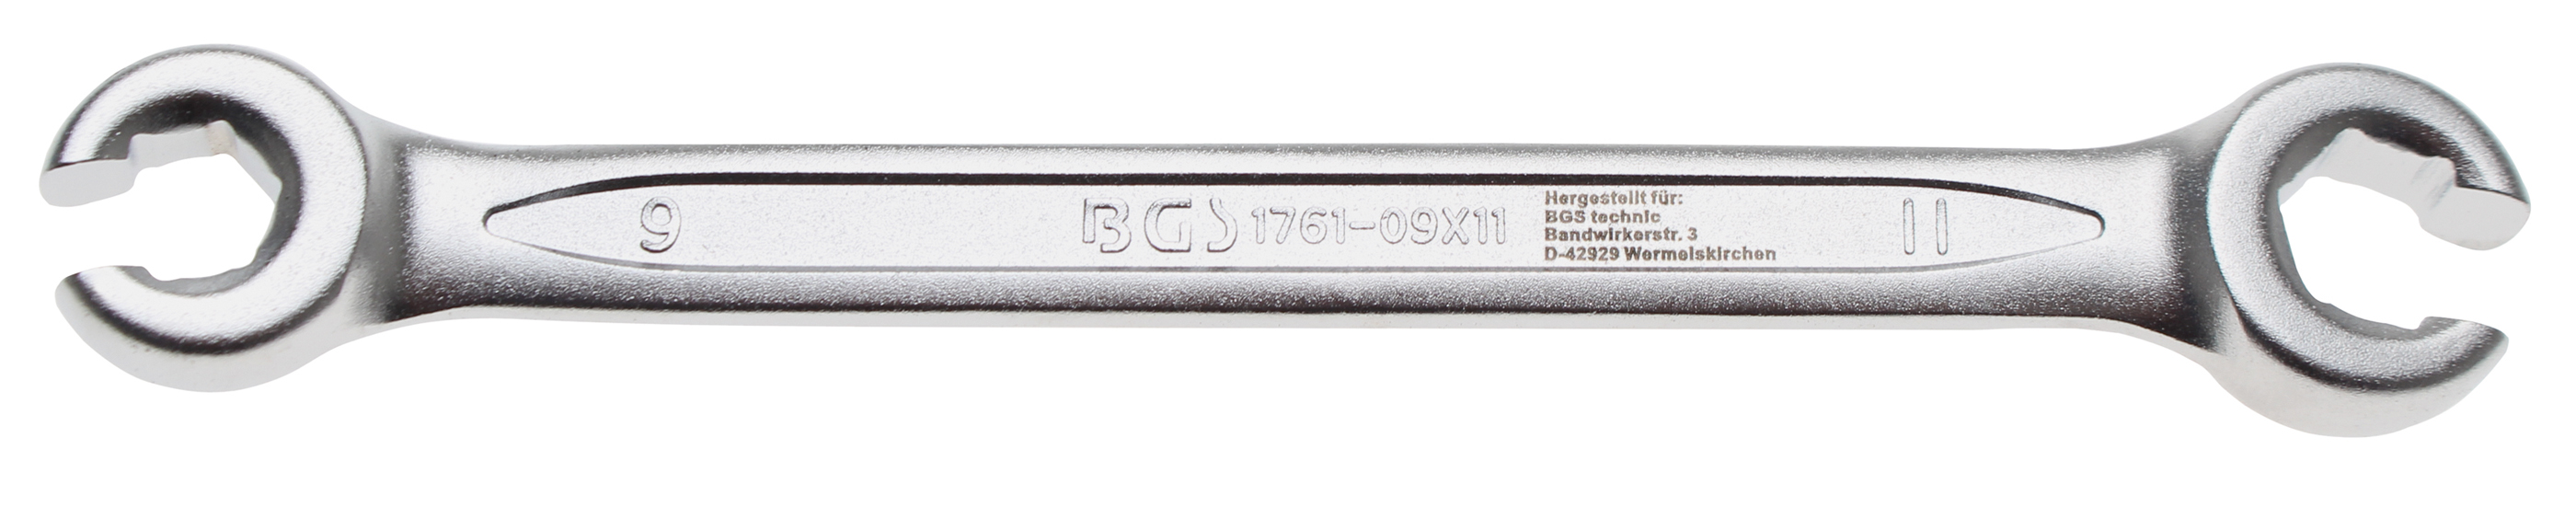 BGS 1761-9x11 Cheie conducte,9 x 11 mm